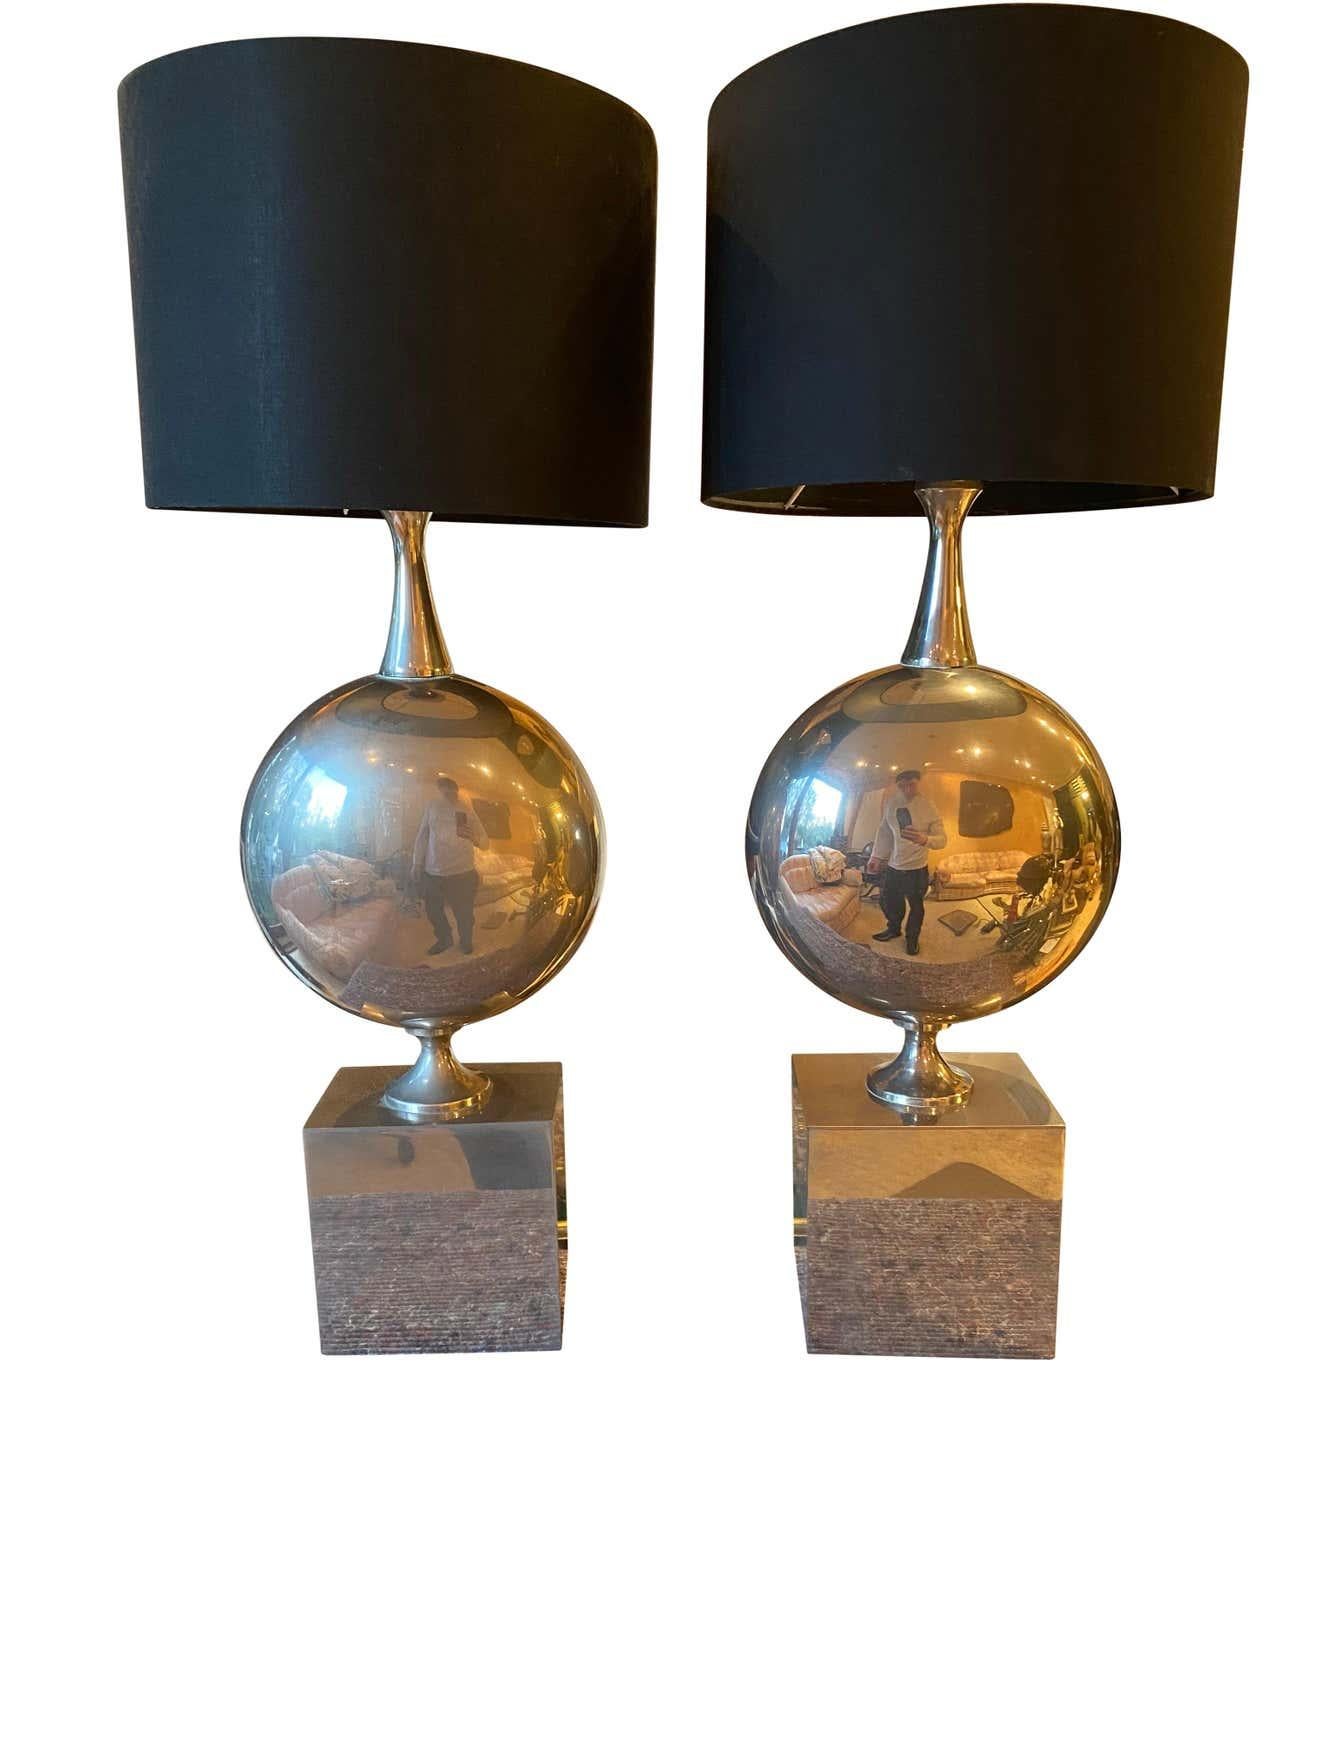 Maison Barbier Pair of Chromed Steel Table Lamps, 1970s For Sale 1